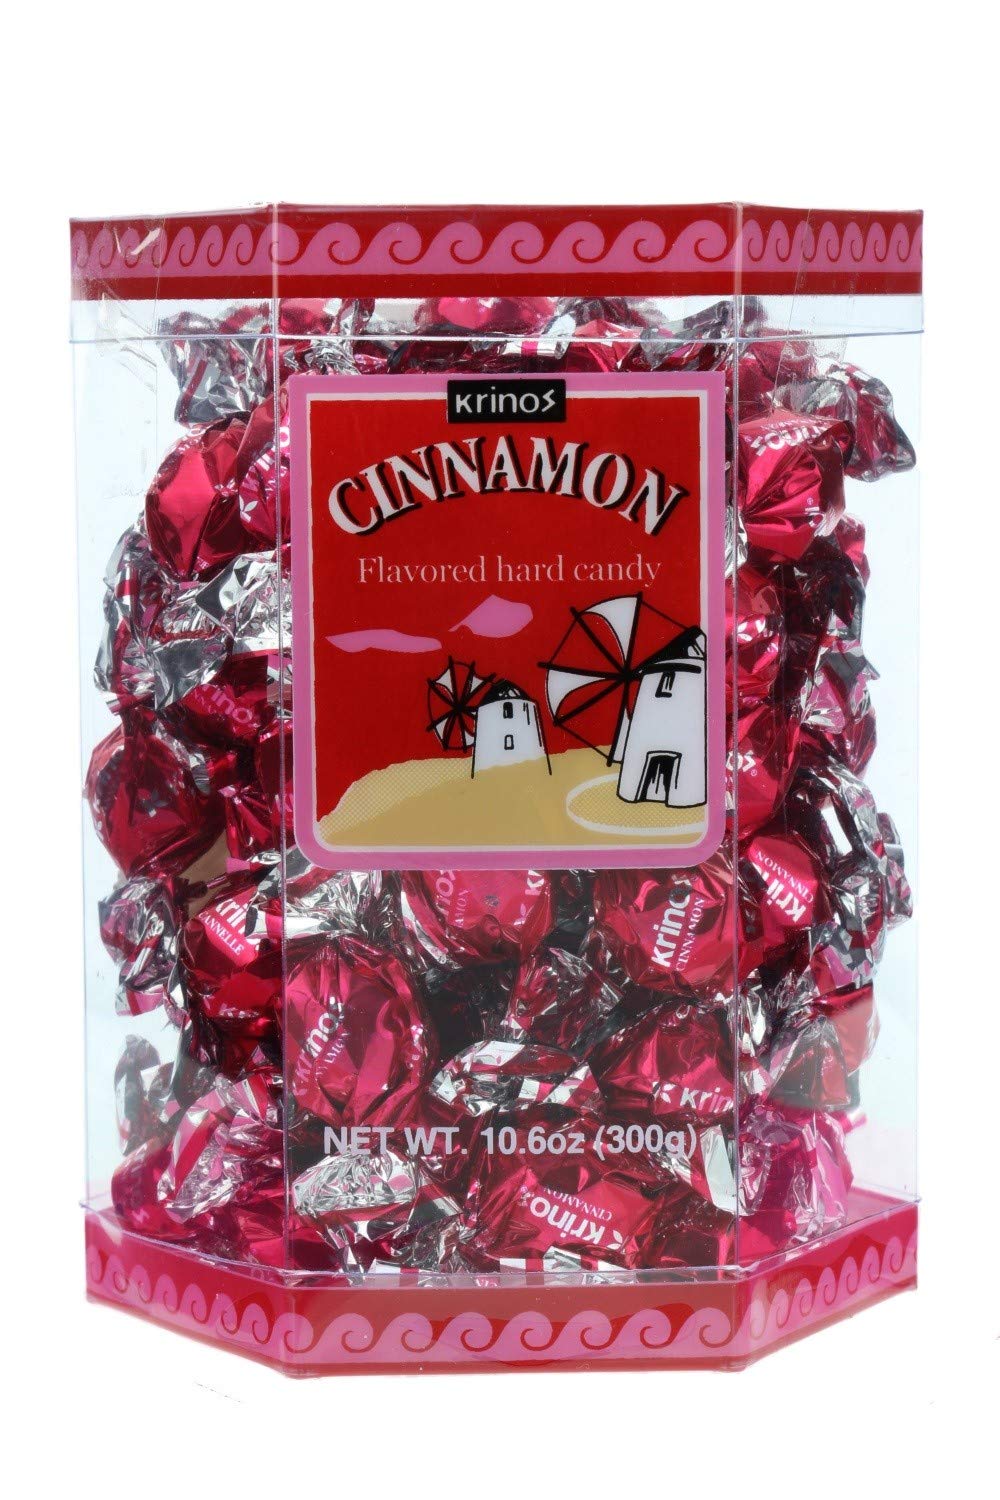 Krinos Cinnamon Candy 300g plastic boxes